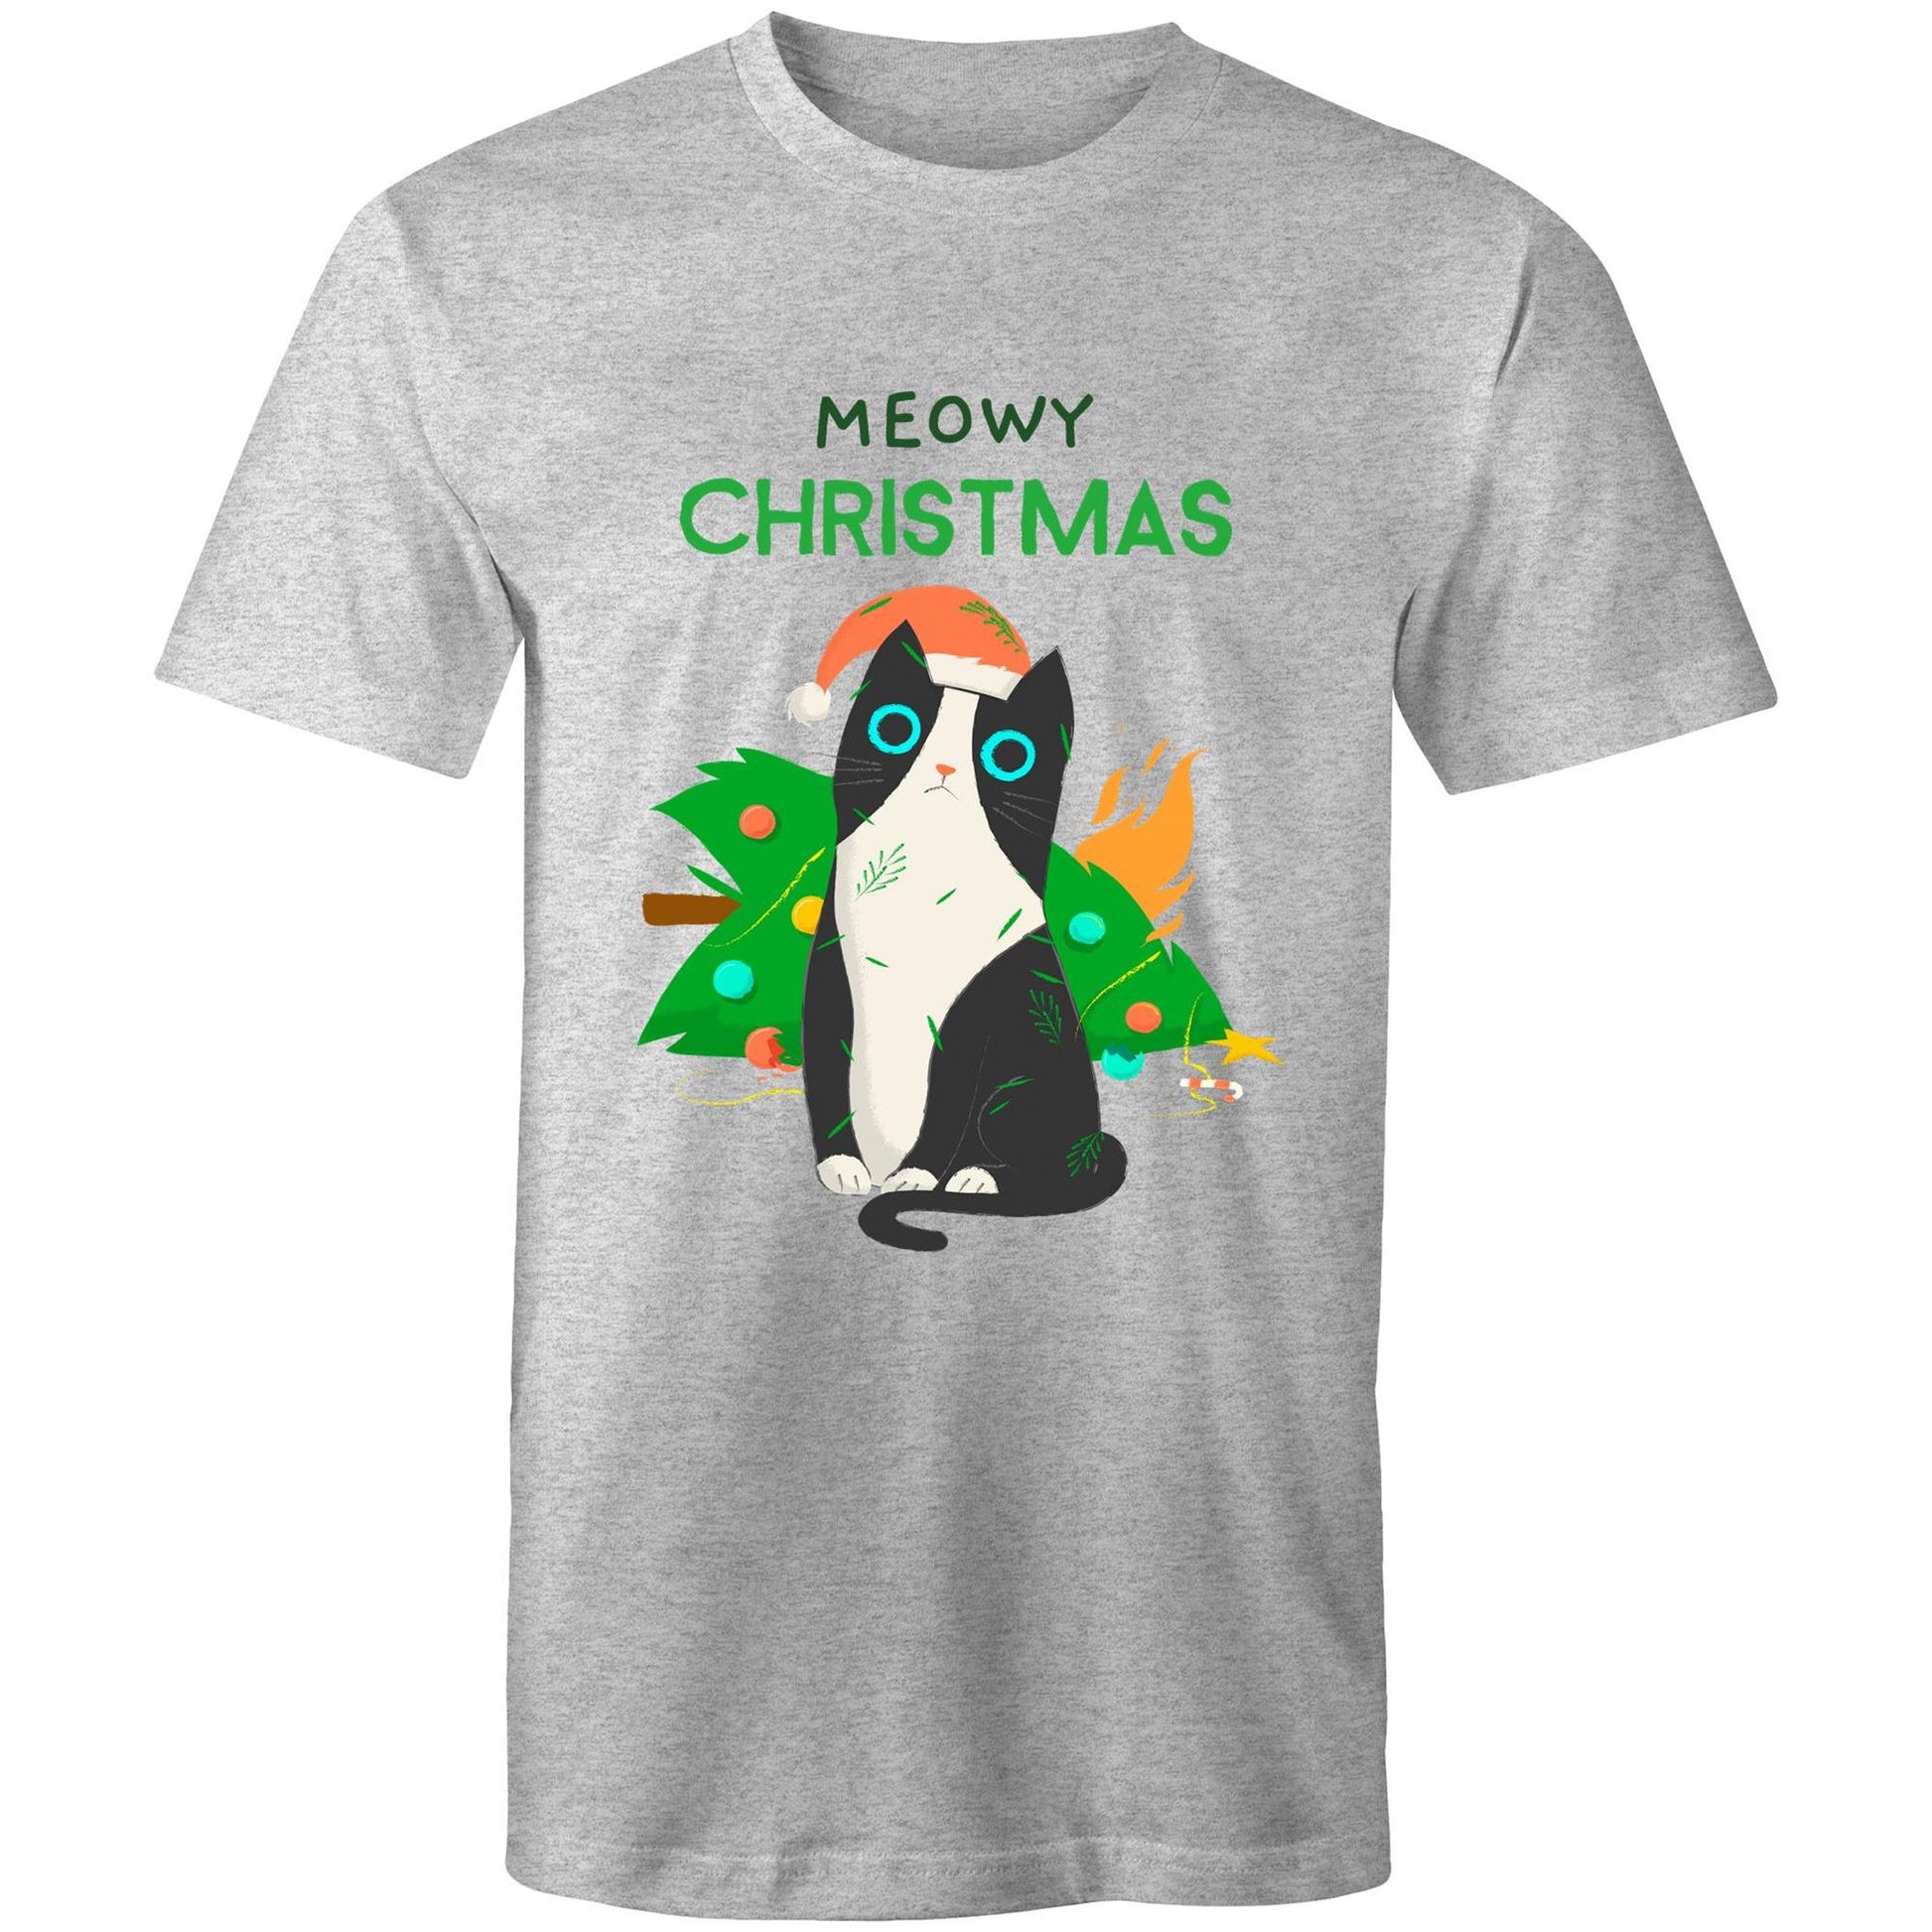 Meowy Christmas - Mens T-Shirt Grey Marle Christmas Mens T-shirt Merry Christmas